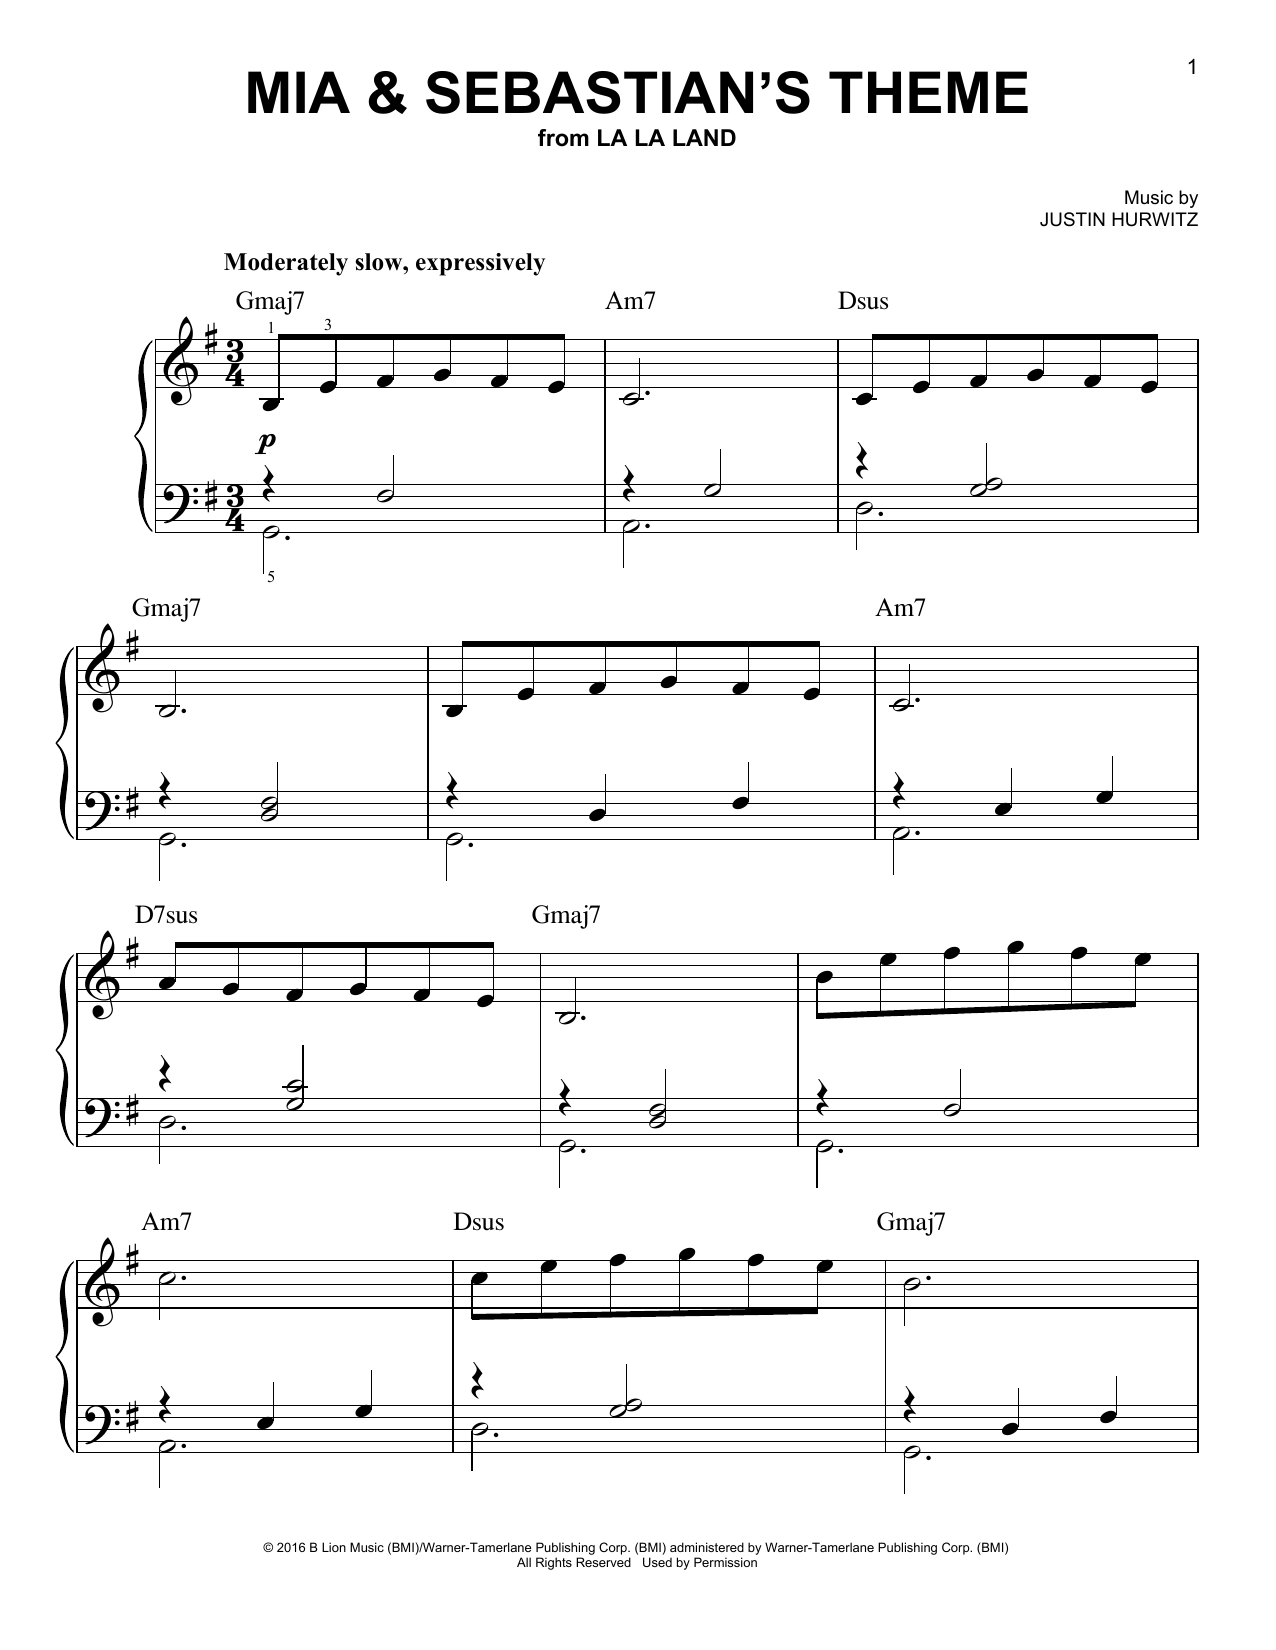 Download Justin Hurwitz Mia & Sebastian's Theme (from La La Land) Sheet Music and learn how to play Tenor Sax Solo PDF digital score in minutes